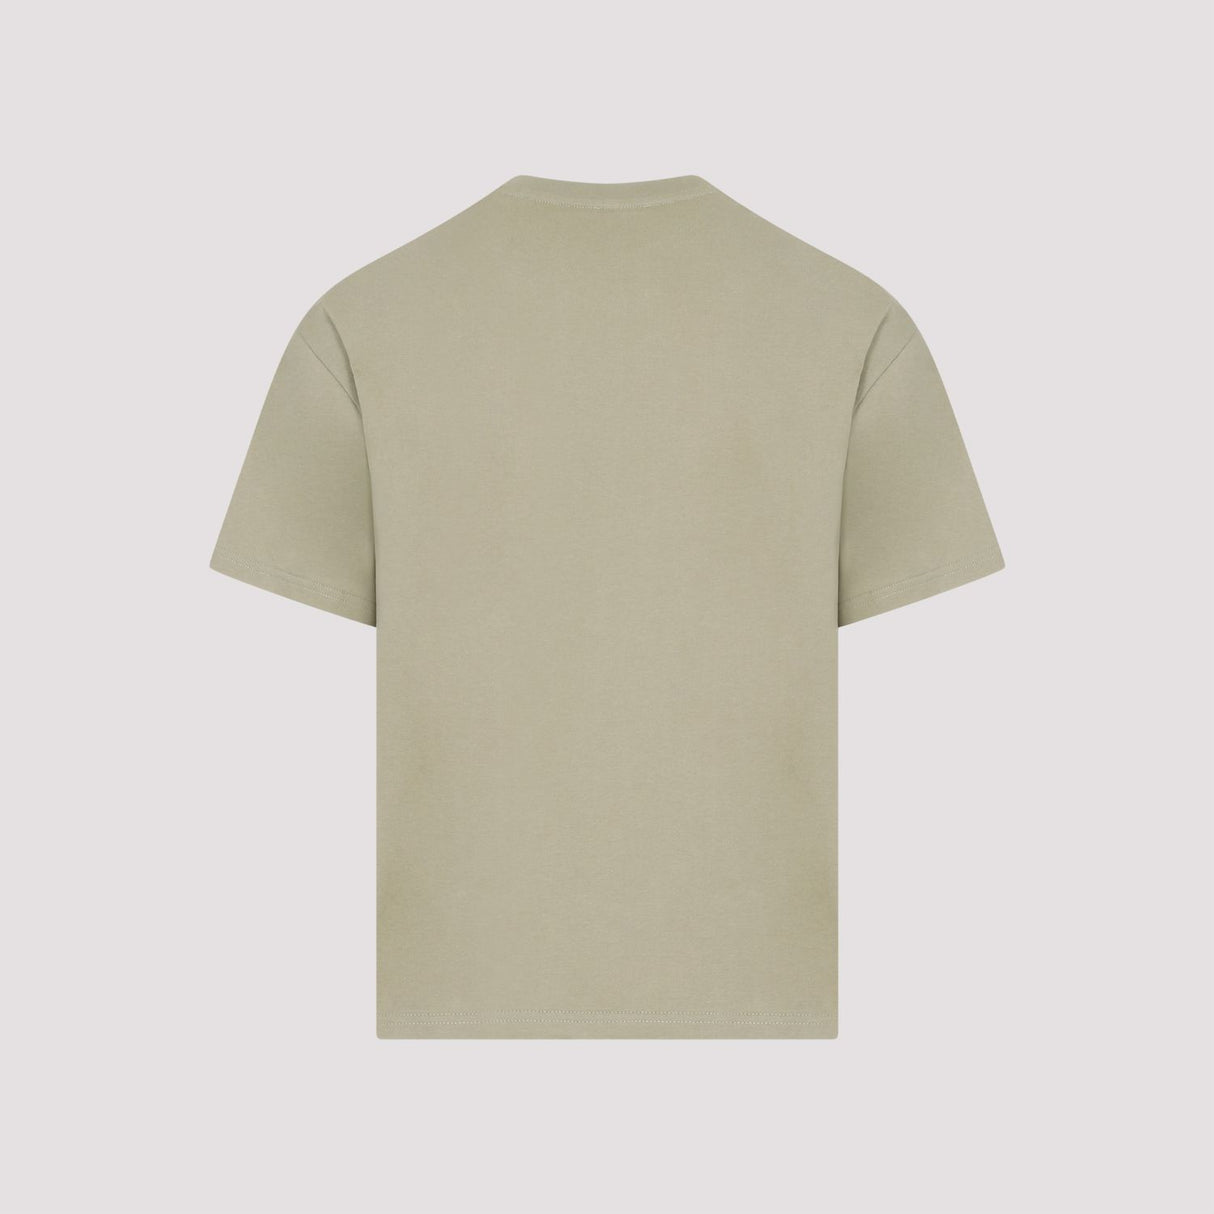 ETRO Green Cotton Men's T-Shirt